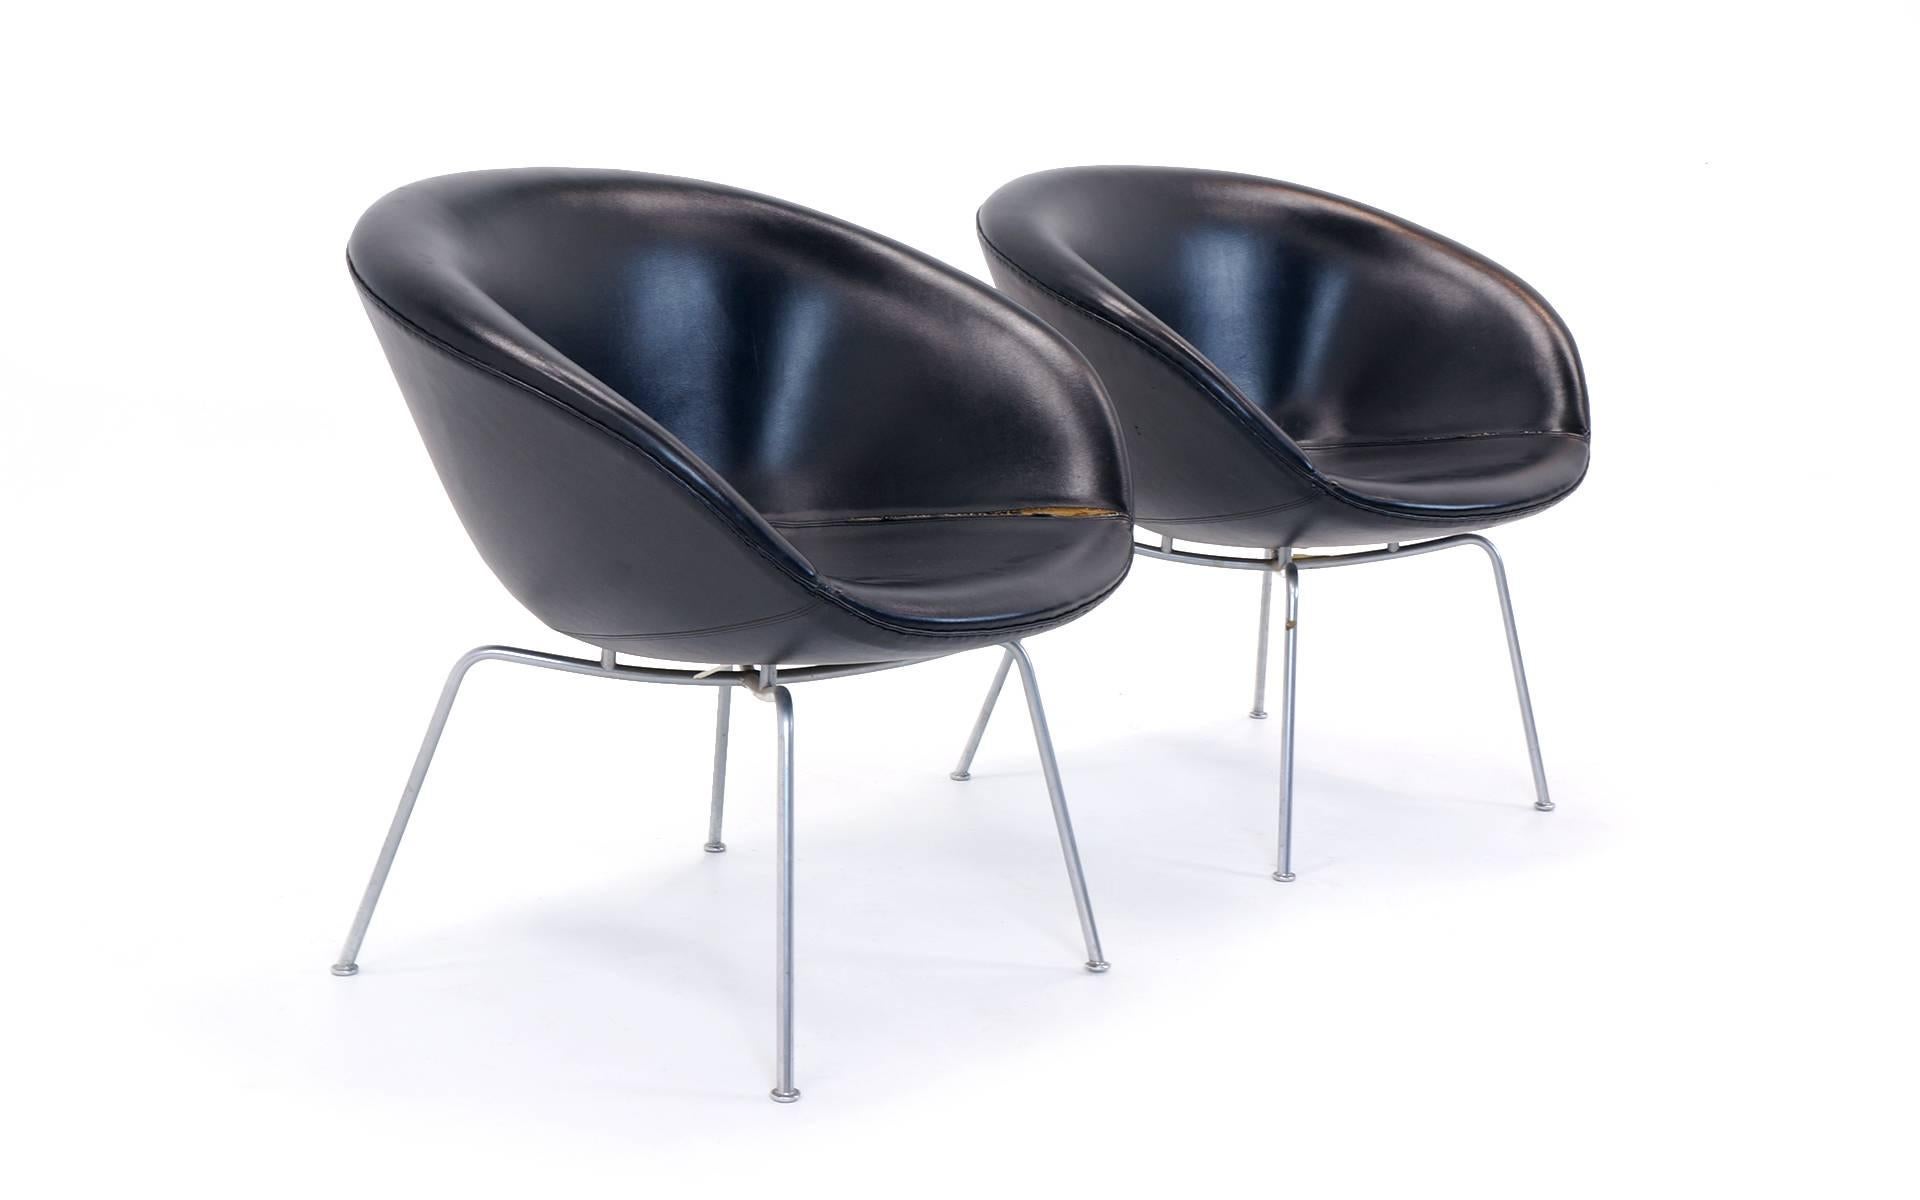 Pair of Pot chairs by Arne Jocobsen retaining their original Naugahyde upholstery.